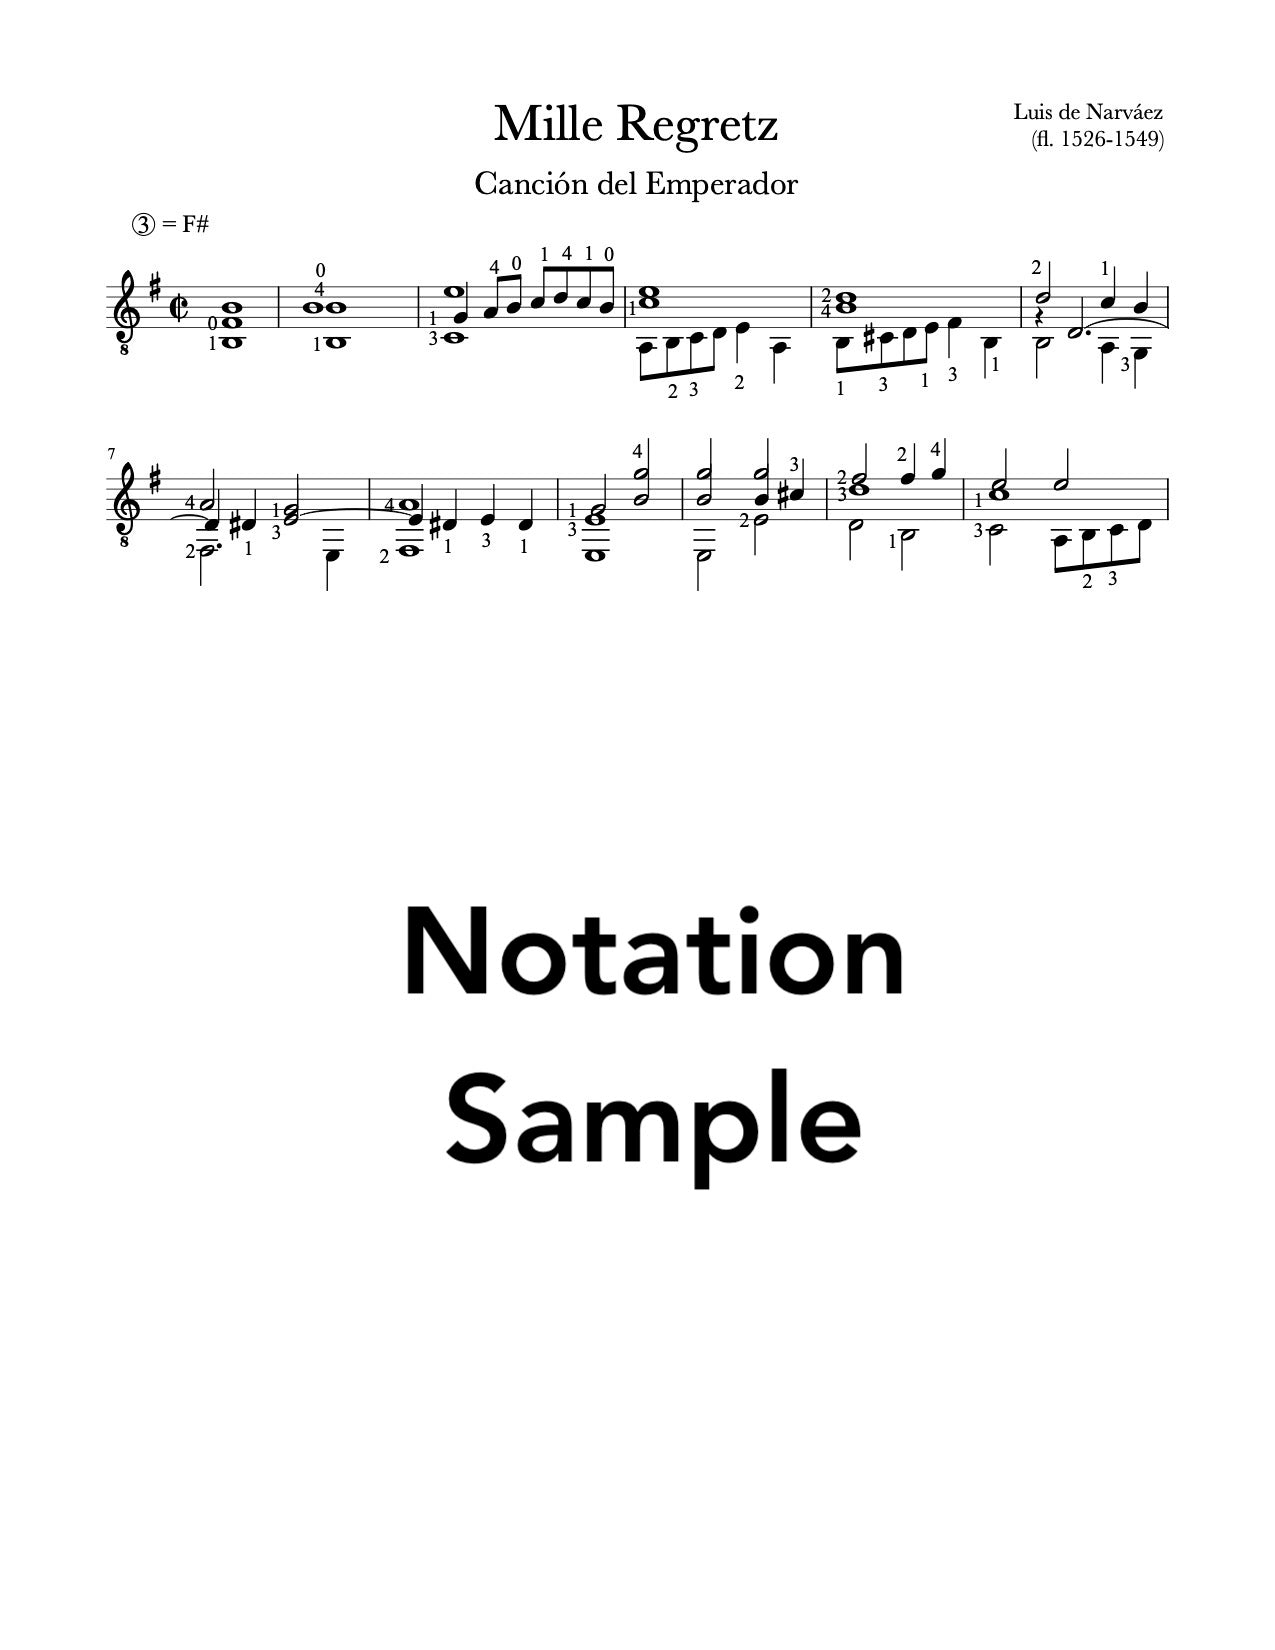 Mille Regretz (Canción del Emperador) by Narváez for Guitar (Notation Sample)